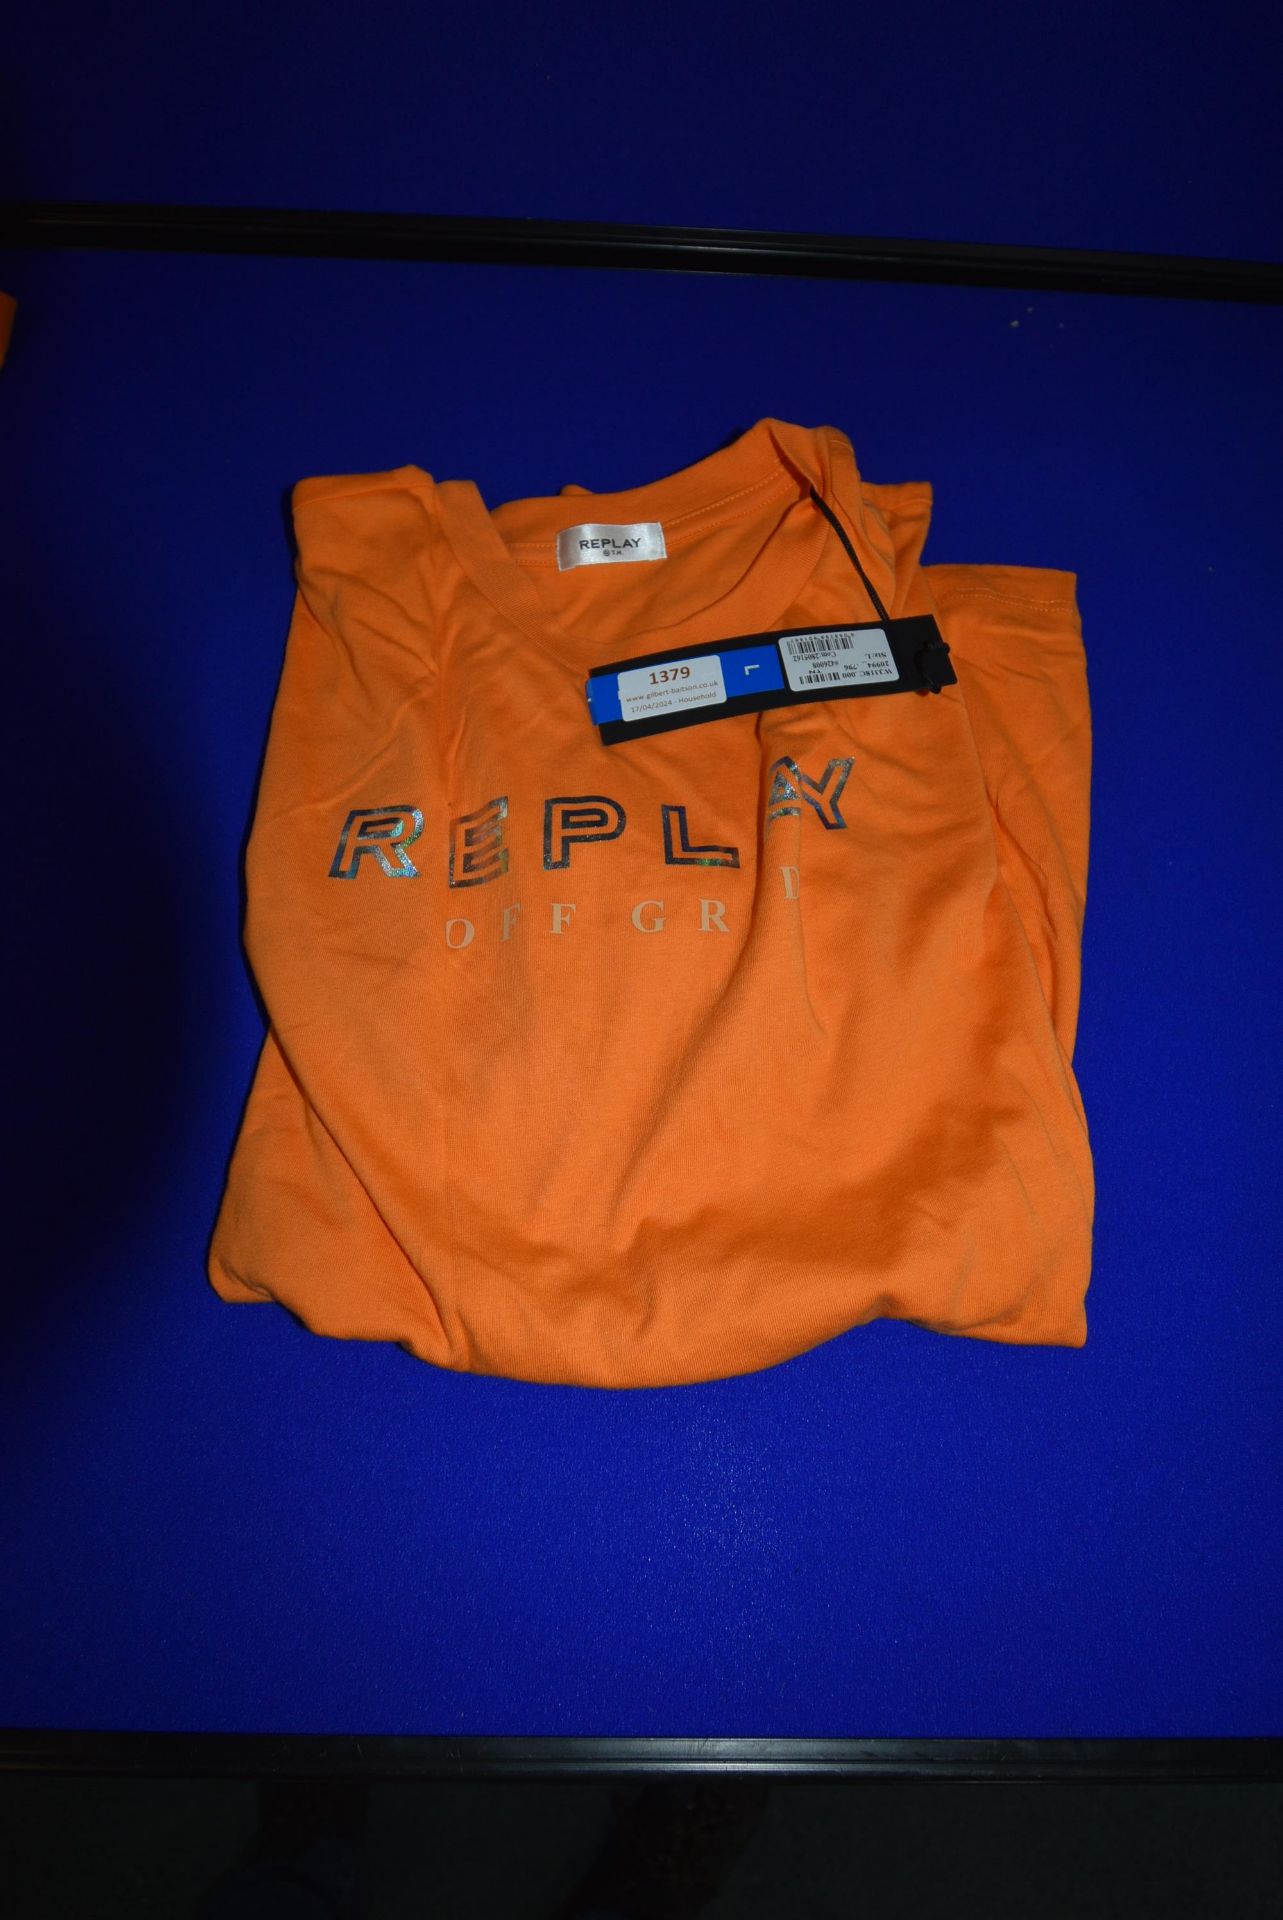 *Replay Off Grid Orange T-Shirt Size: L